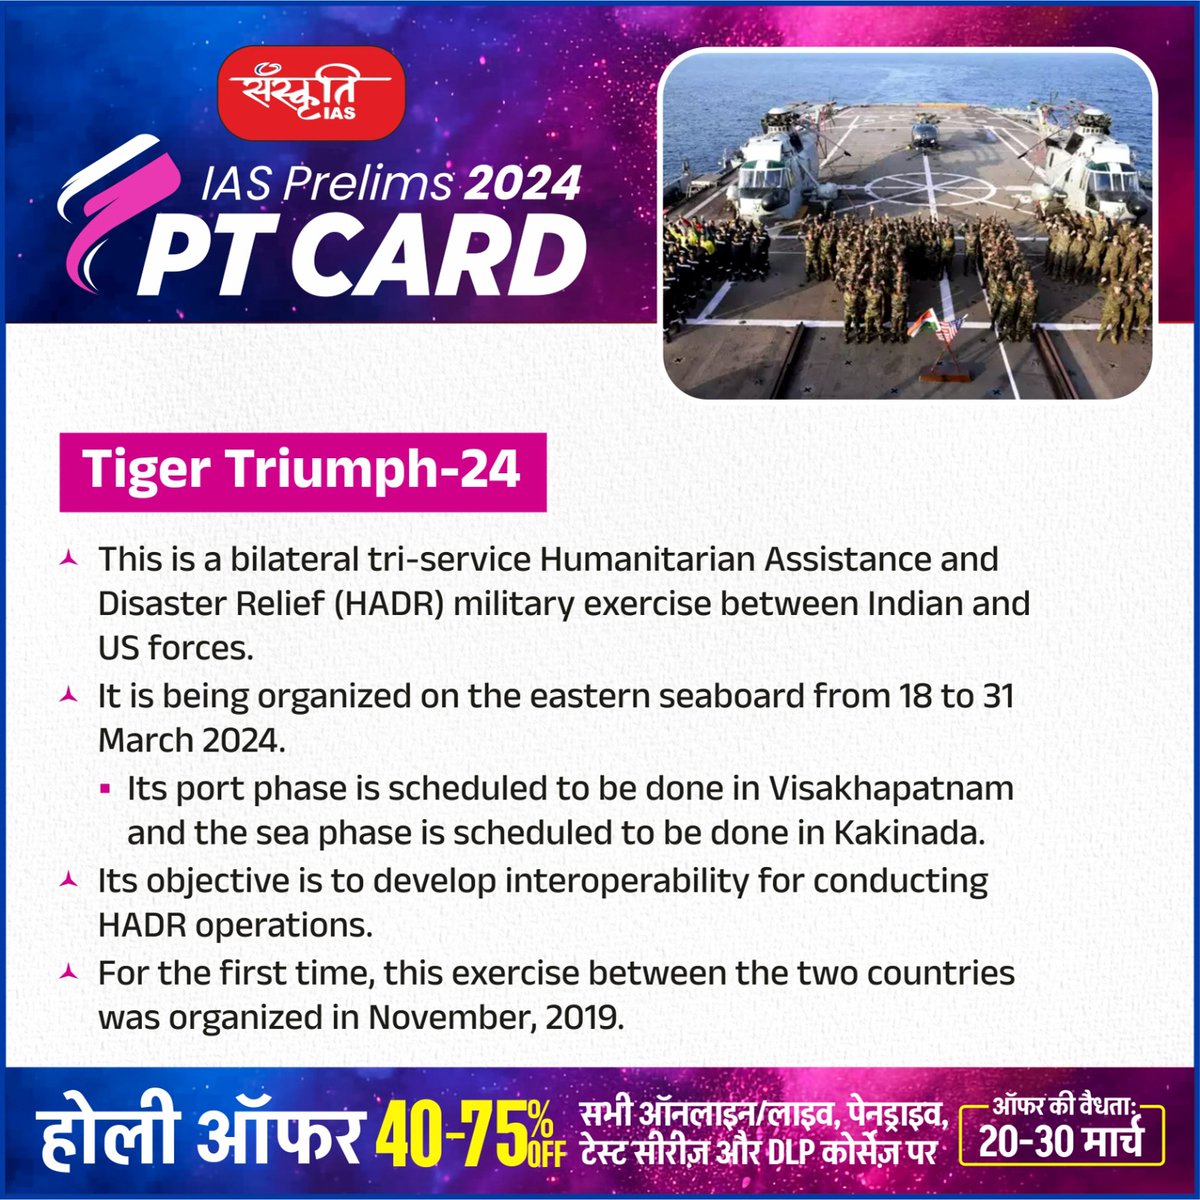 #PT_Card 

Tiger Triumph-24

sanskritiias.com/pt-cards/tiger…

@sanskritiias 

#TigerTriumph24 #UPSC #CivilServices #Prelims #SanskritiIAS #CurrentAffairs